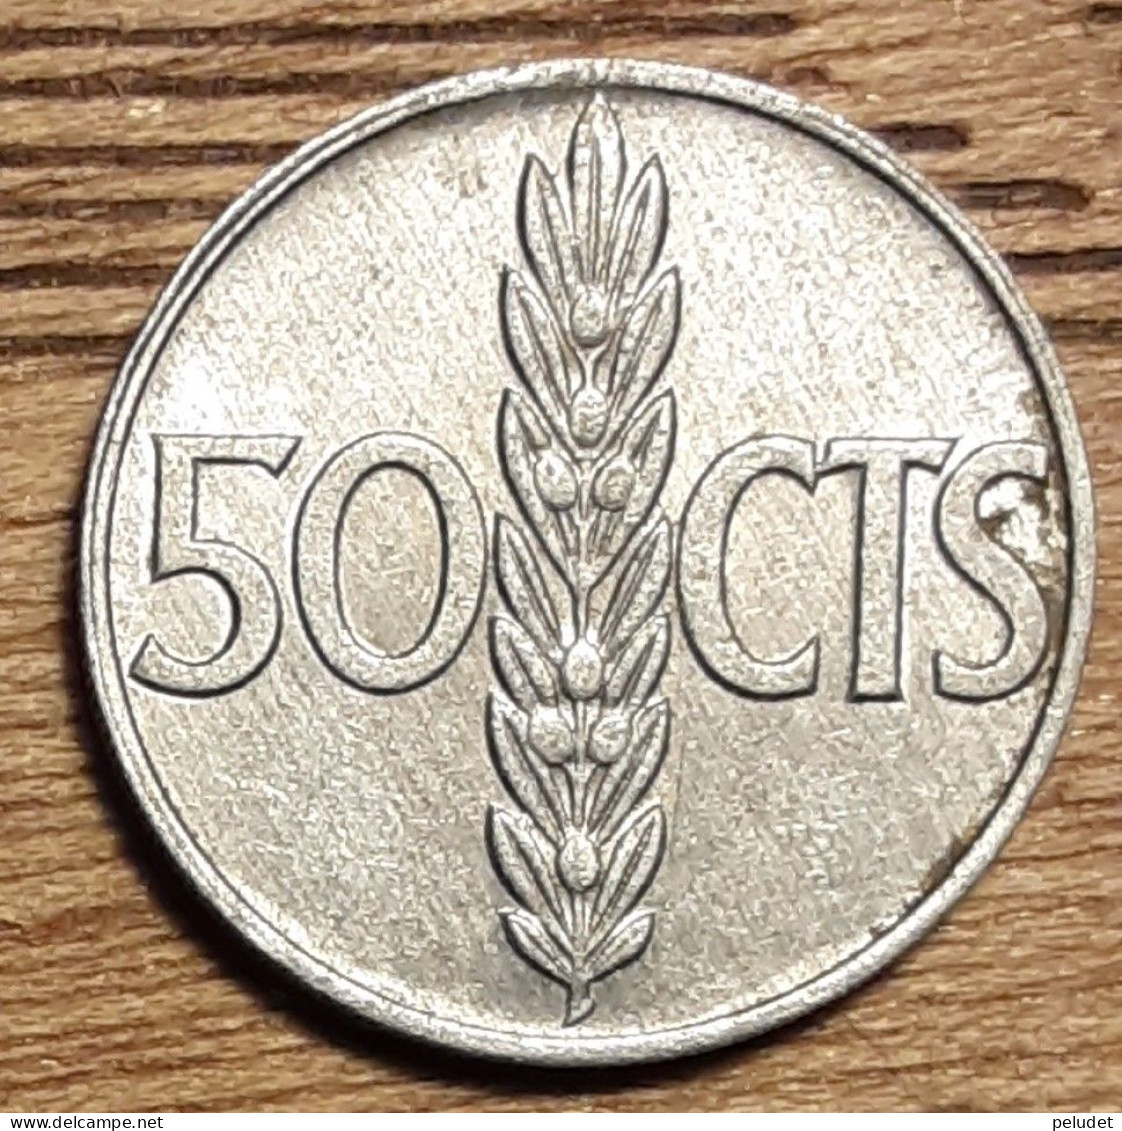 España Spain Espagne, 50 CTS CENTIMOS 1966 / 67* KM# 795 - 50 Centiem